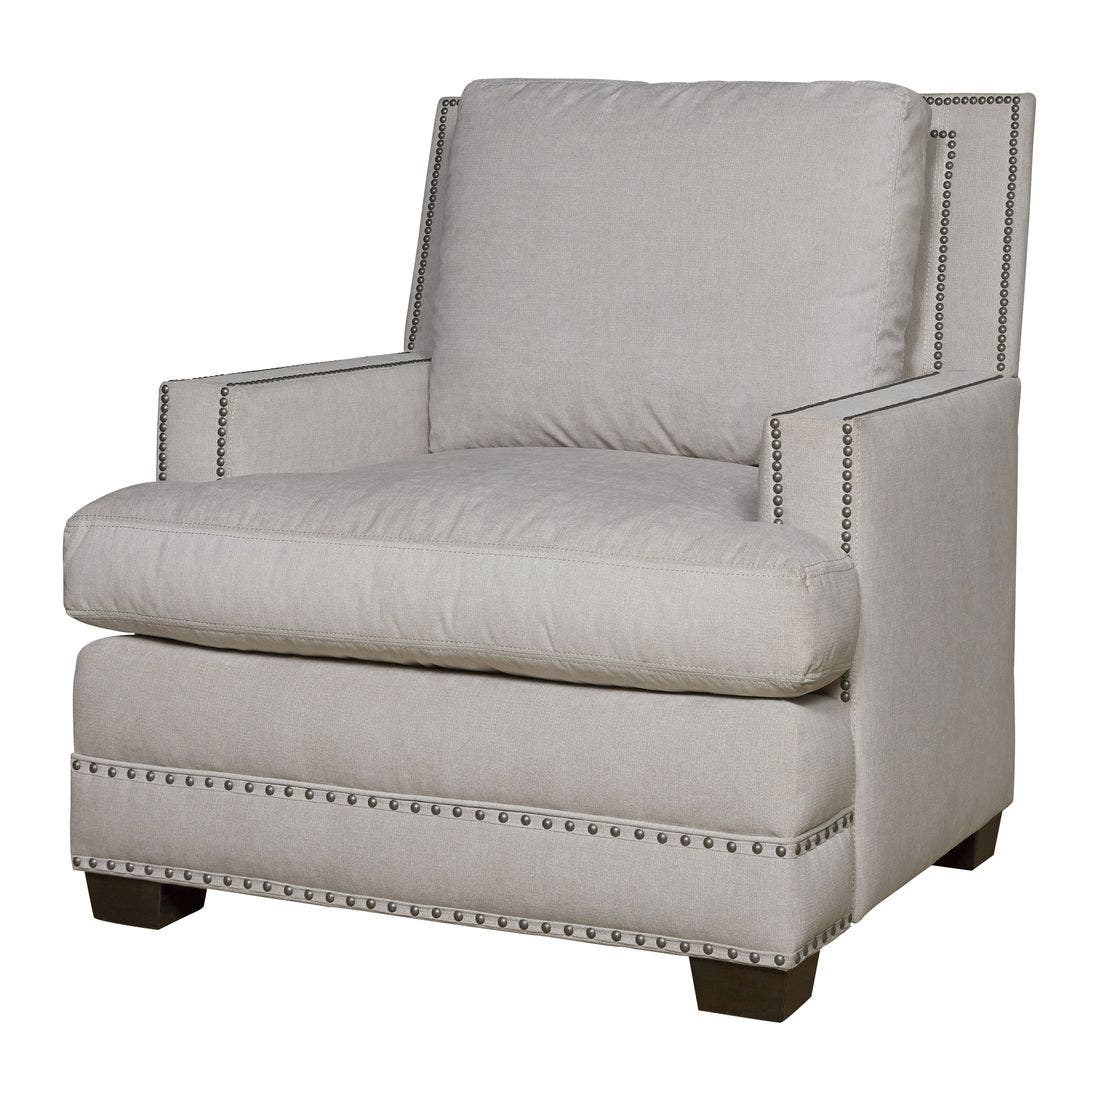 19151906-772503-617-furniture-sofa-recliner-sofas-01